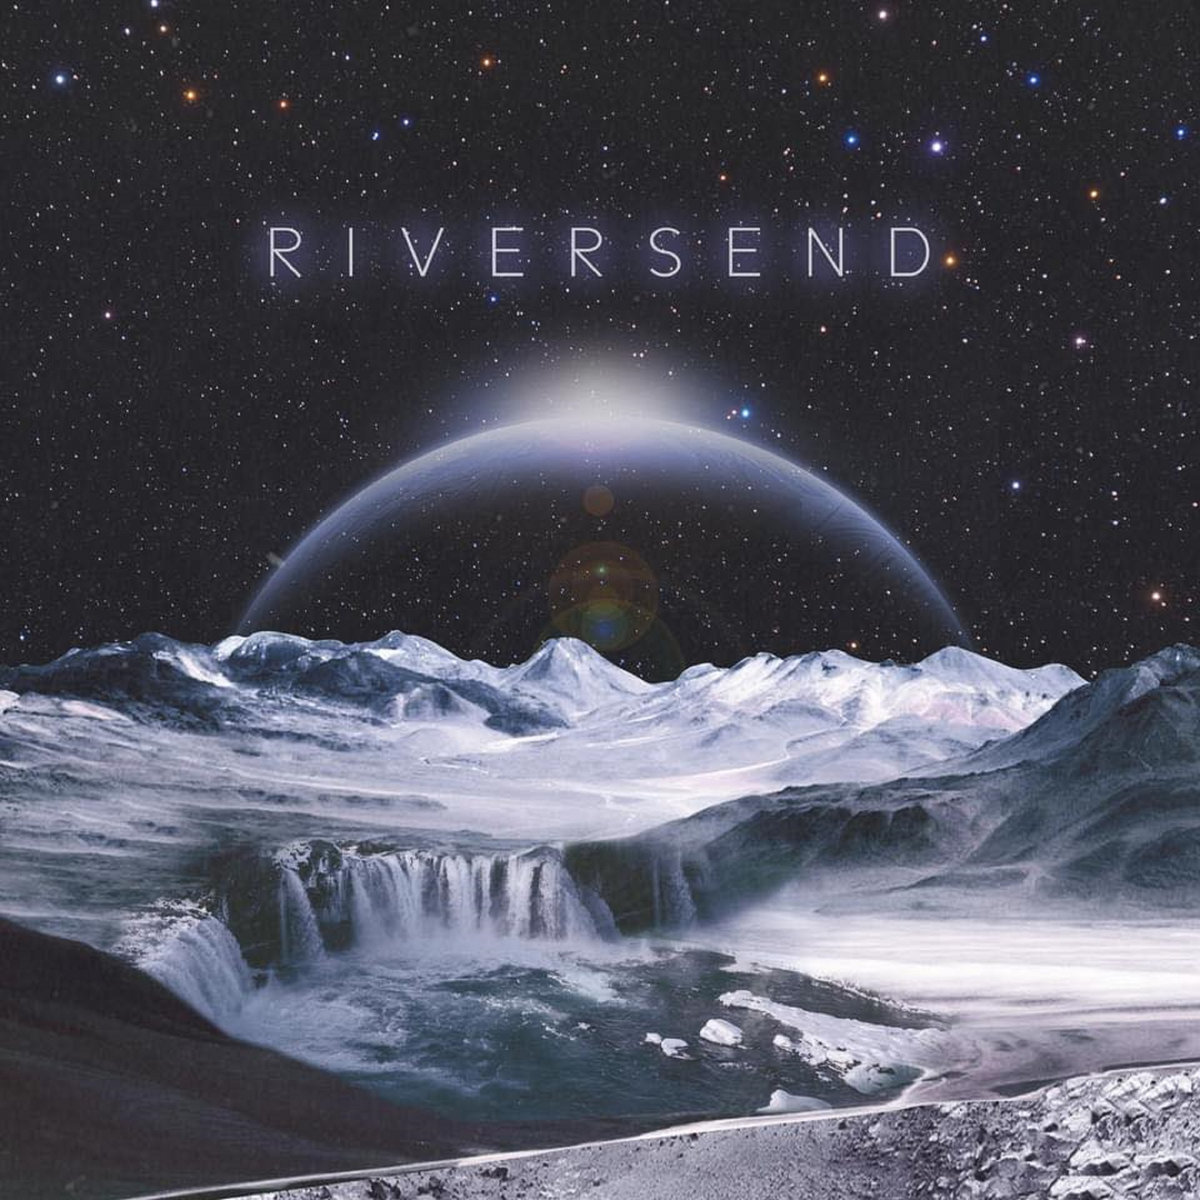 RIVERSEND – Riversend